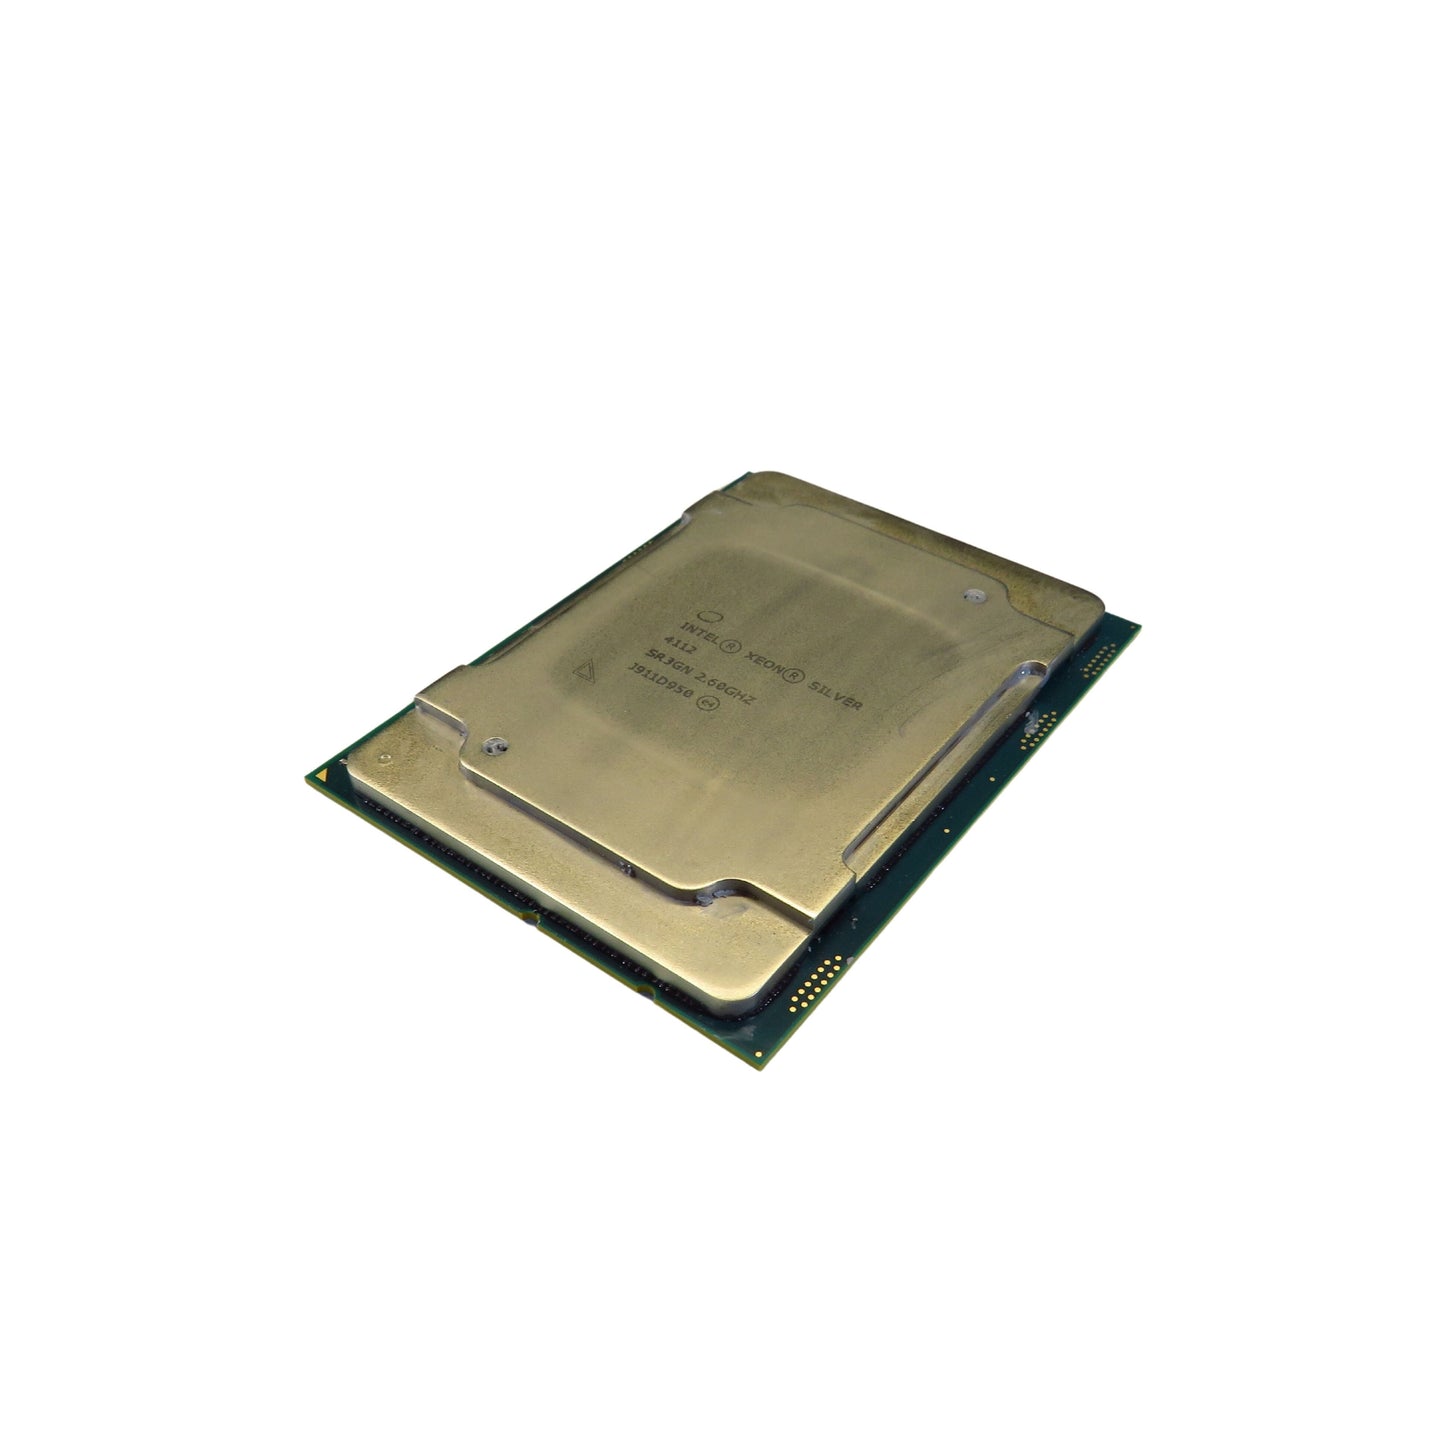 Intel SR3GN Xeon Silver 4112 2.6GHz 4 Core LGA3647 Server CPU Processor (Refurbished)